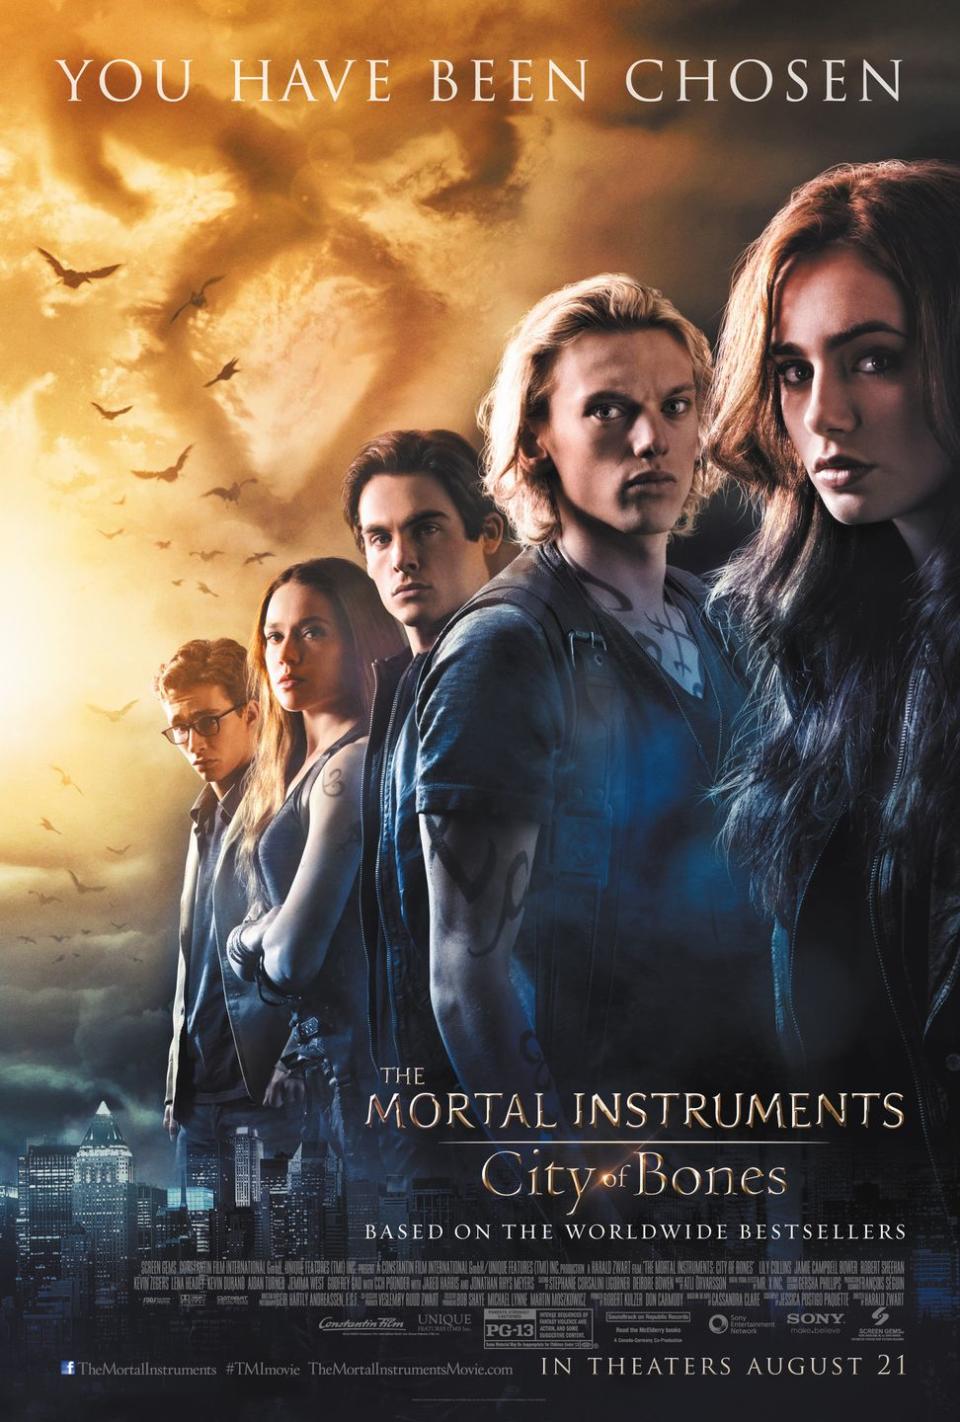 16) The Mortal Instruments